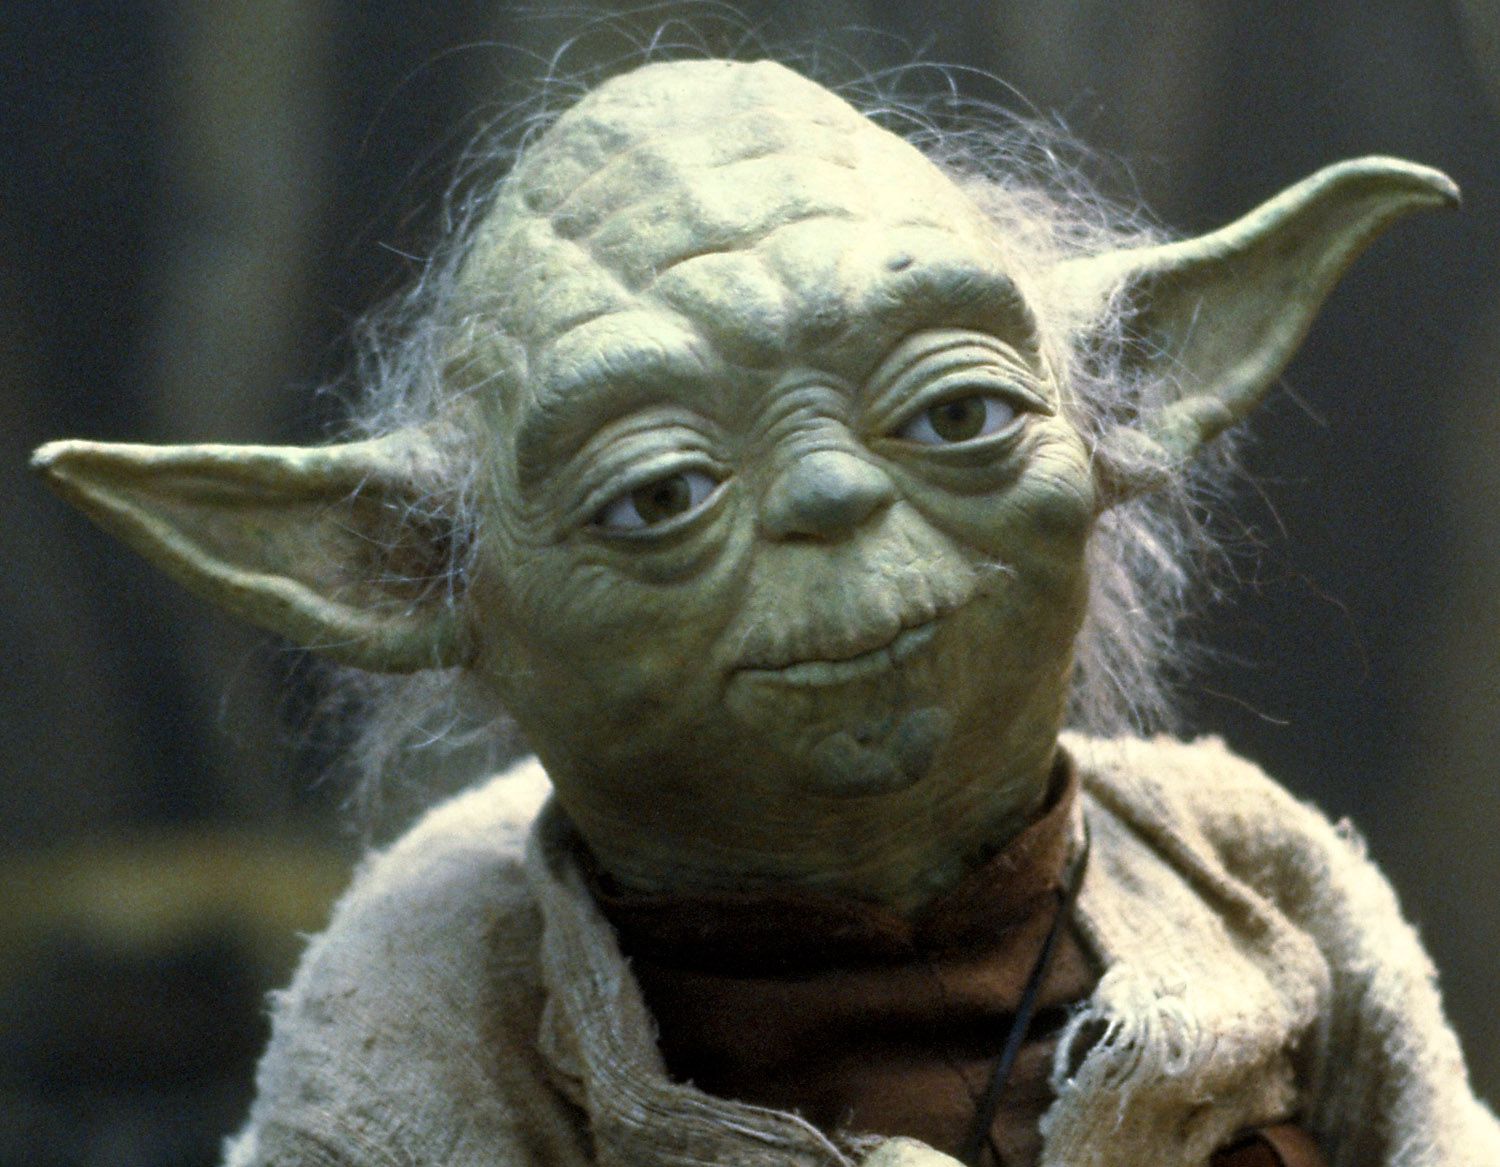 Yoda - Star Wars Character Profile and Biography